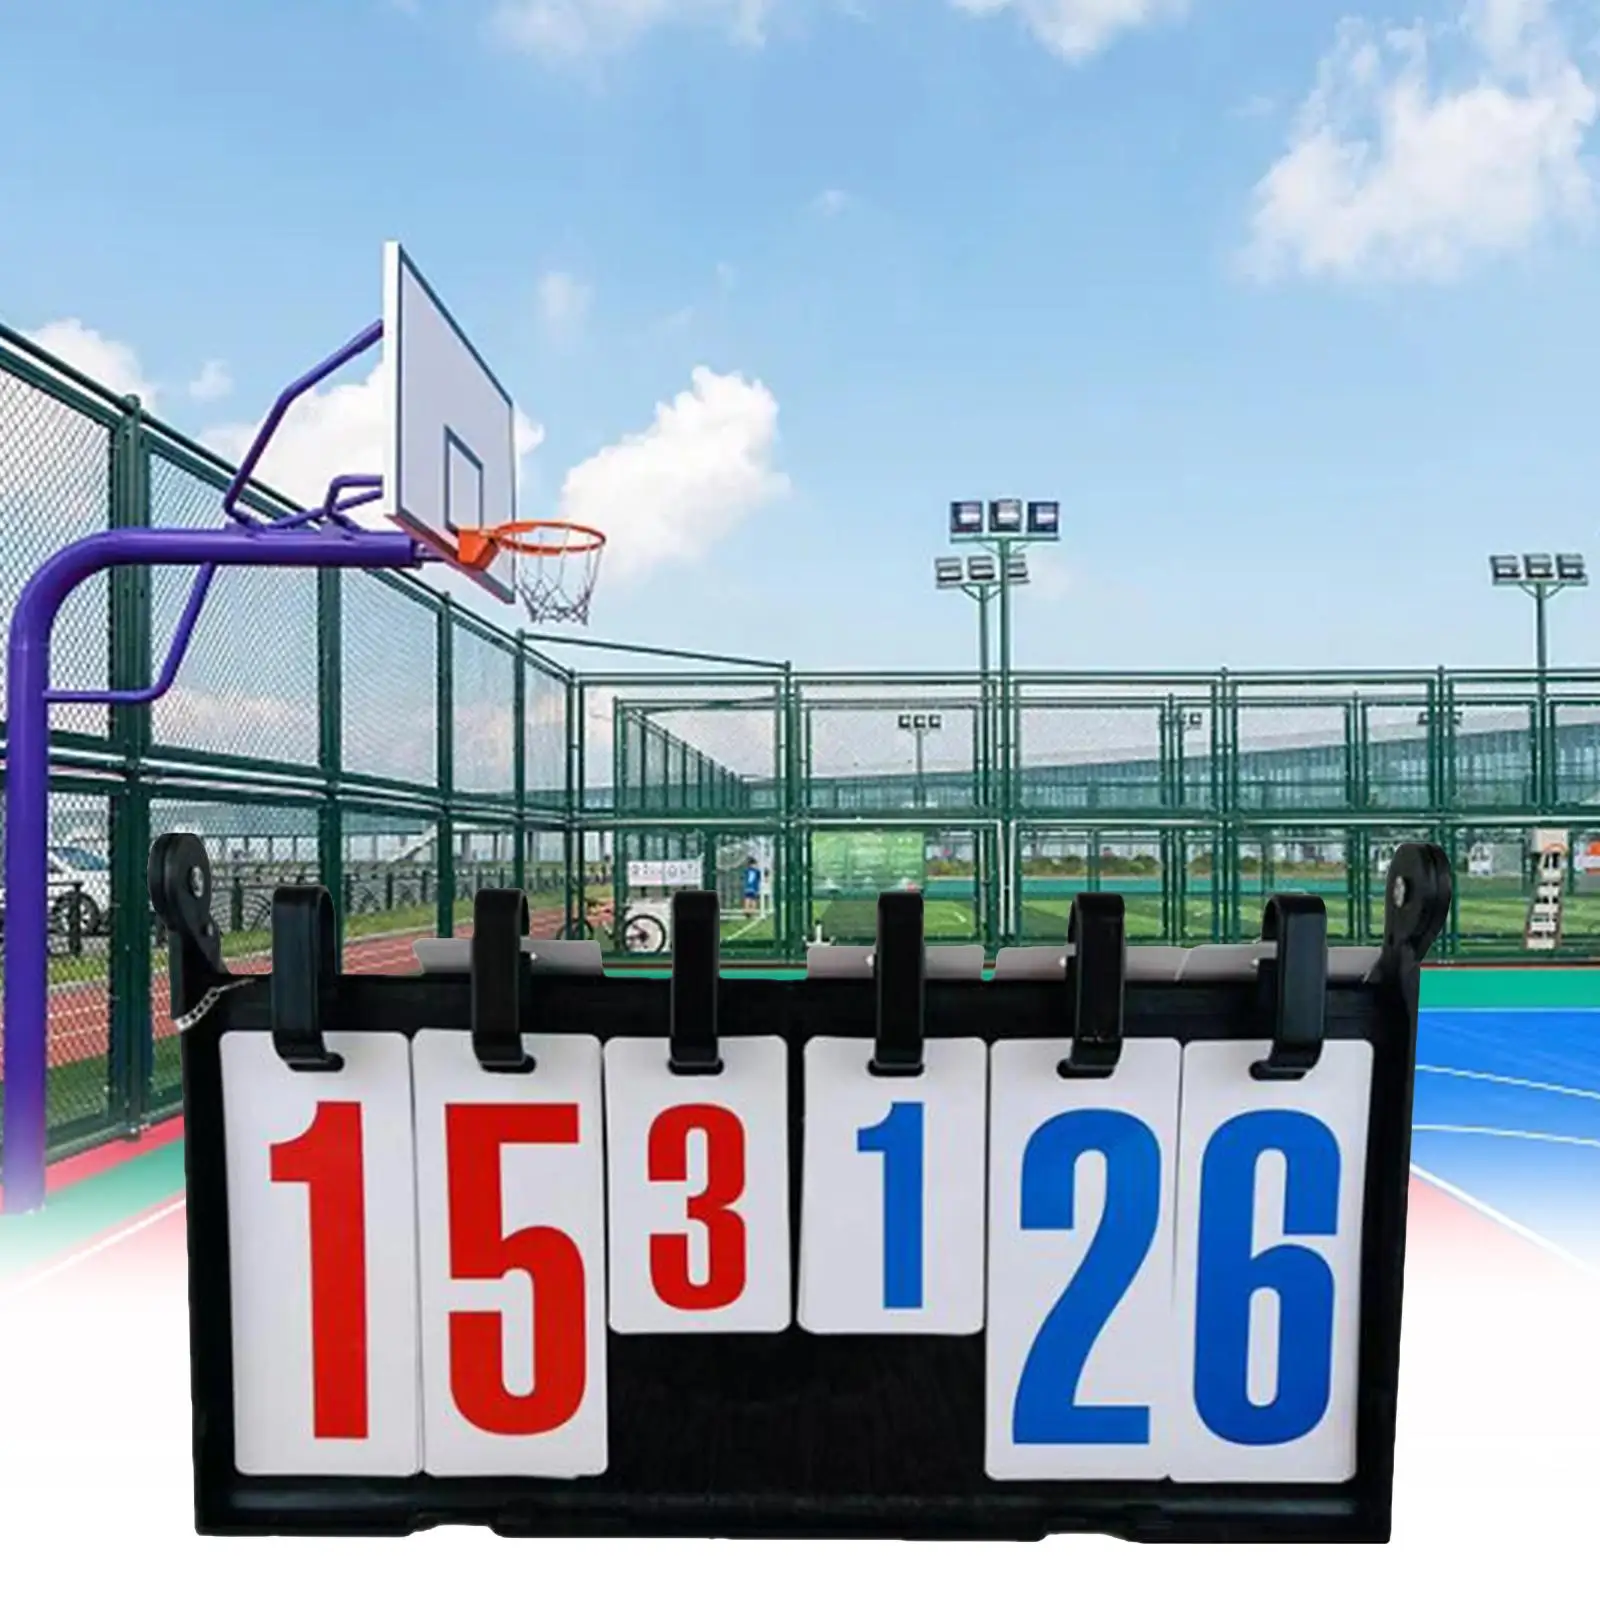 Sport Scoreboard Score Flip Tabletop or Hanging Compact 39cmx23cm 6 Digit Score